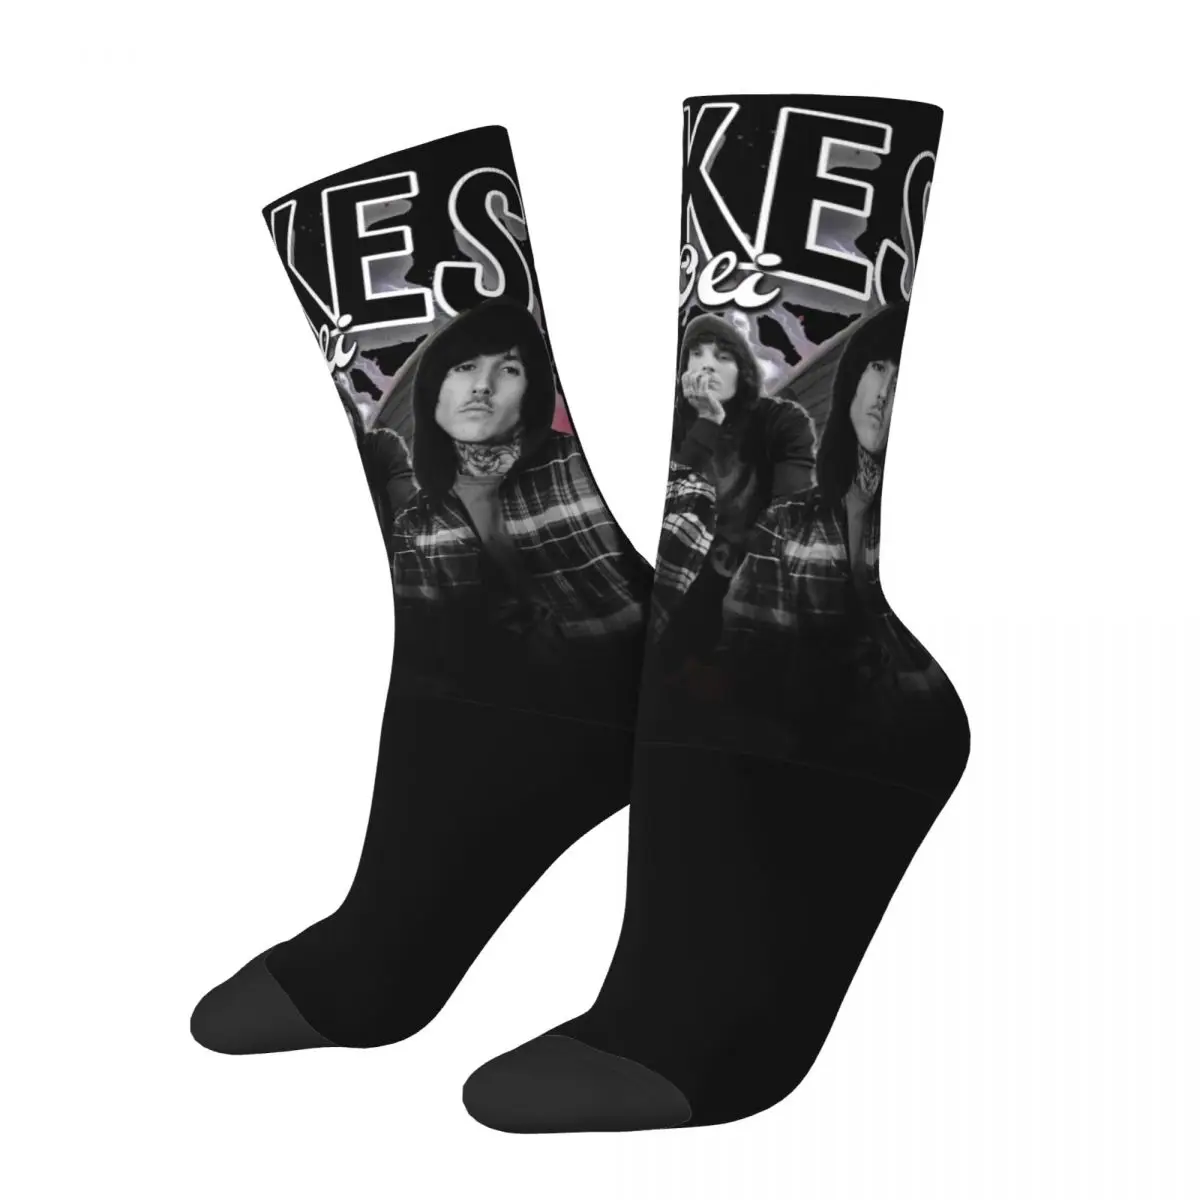 

Casual Female Socks Oli Sykes 90s Bootleg Accessories Cute Funny Singer Sport Socks All Seasons